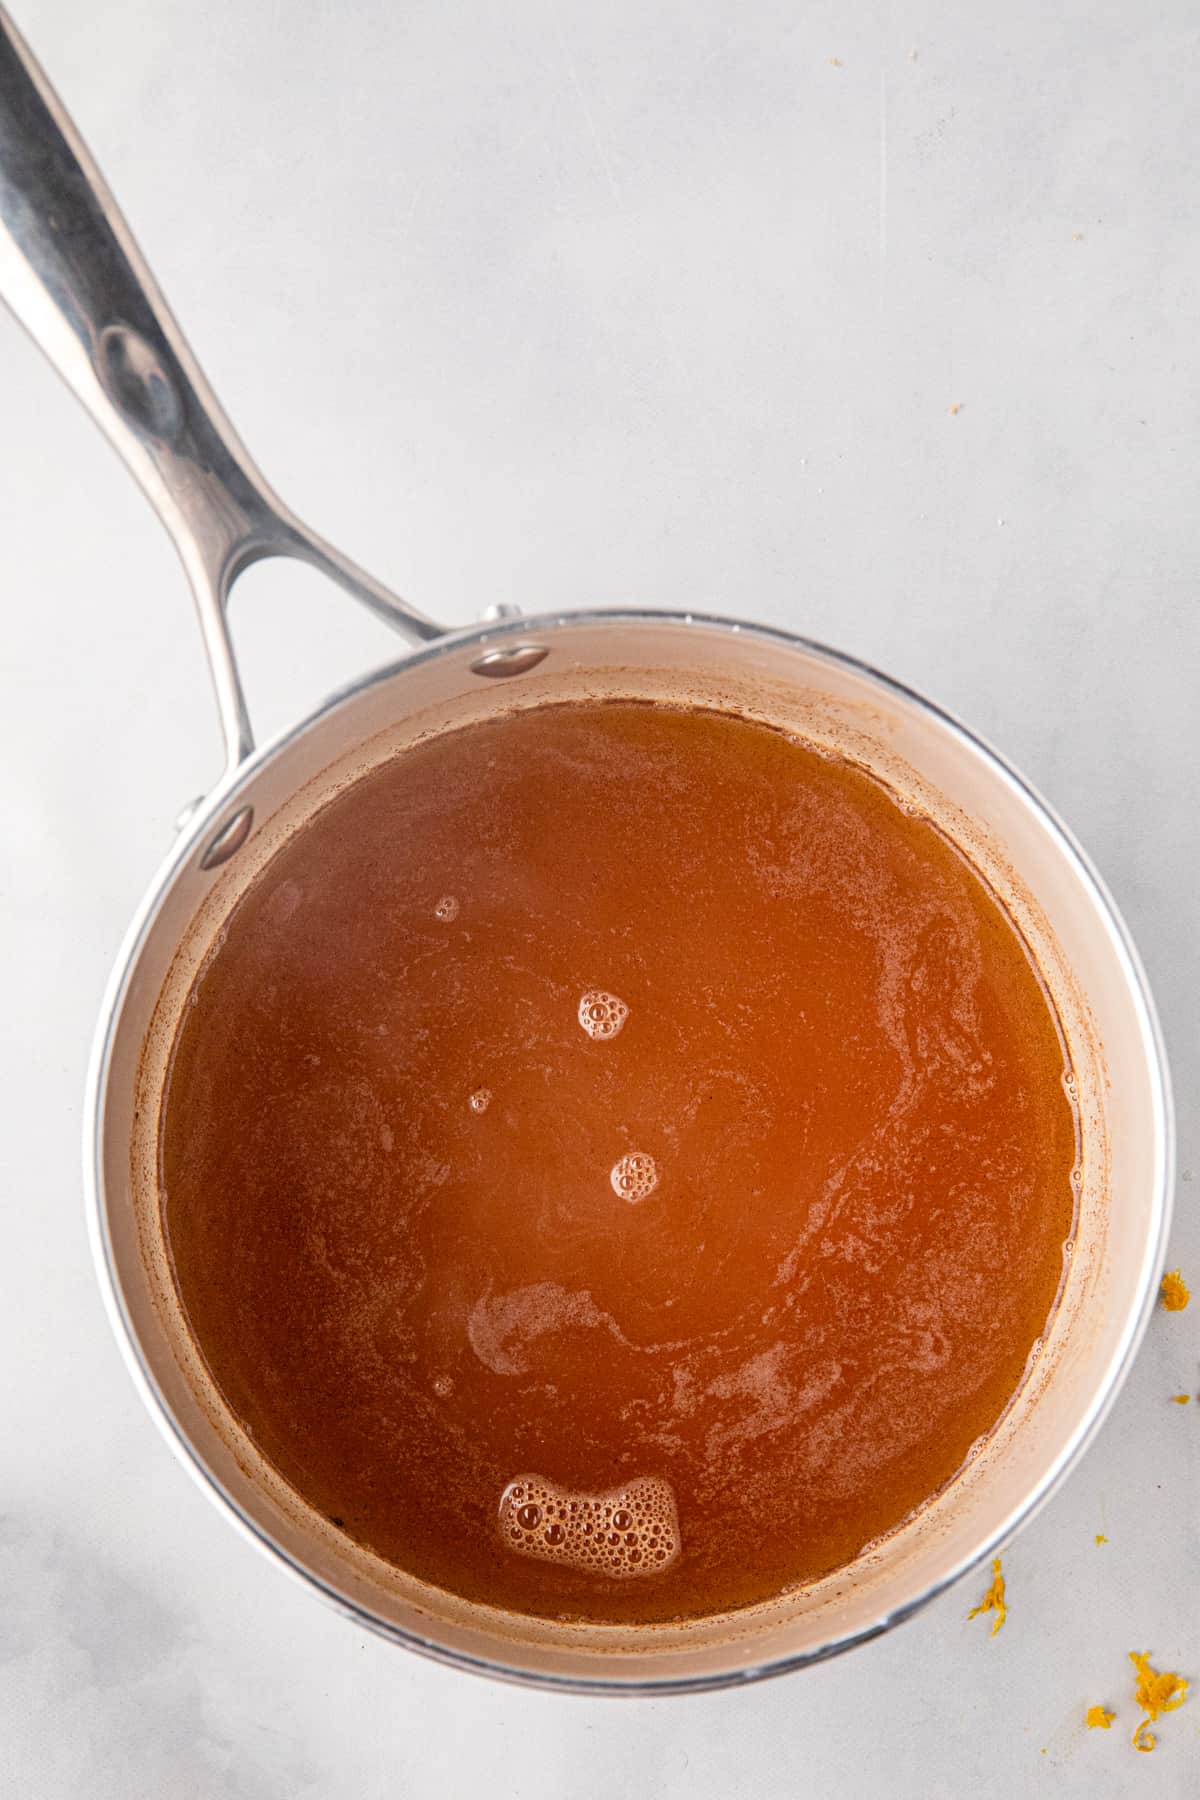 Liquid for cranberry sauce in saucepan